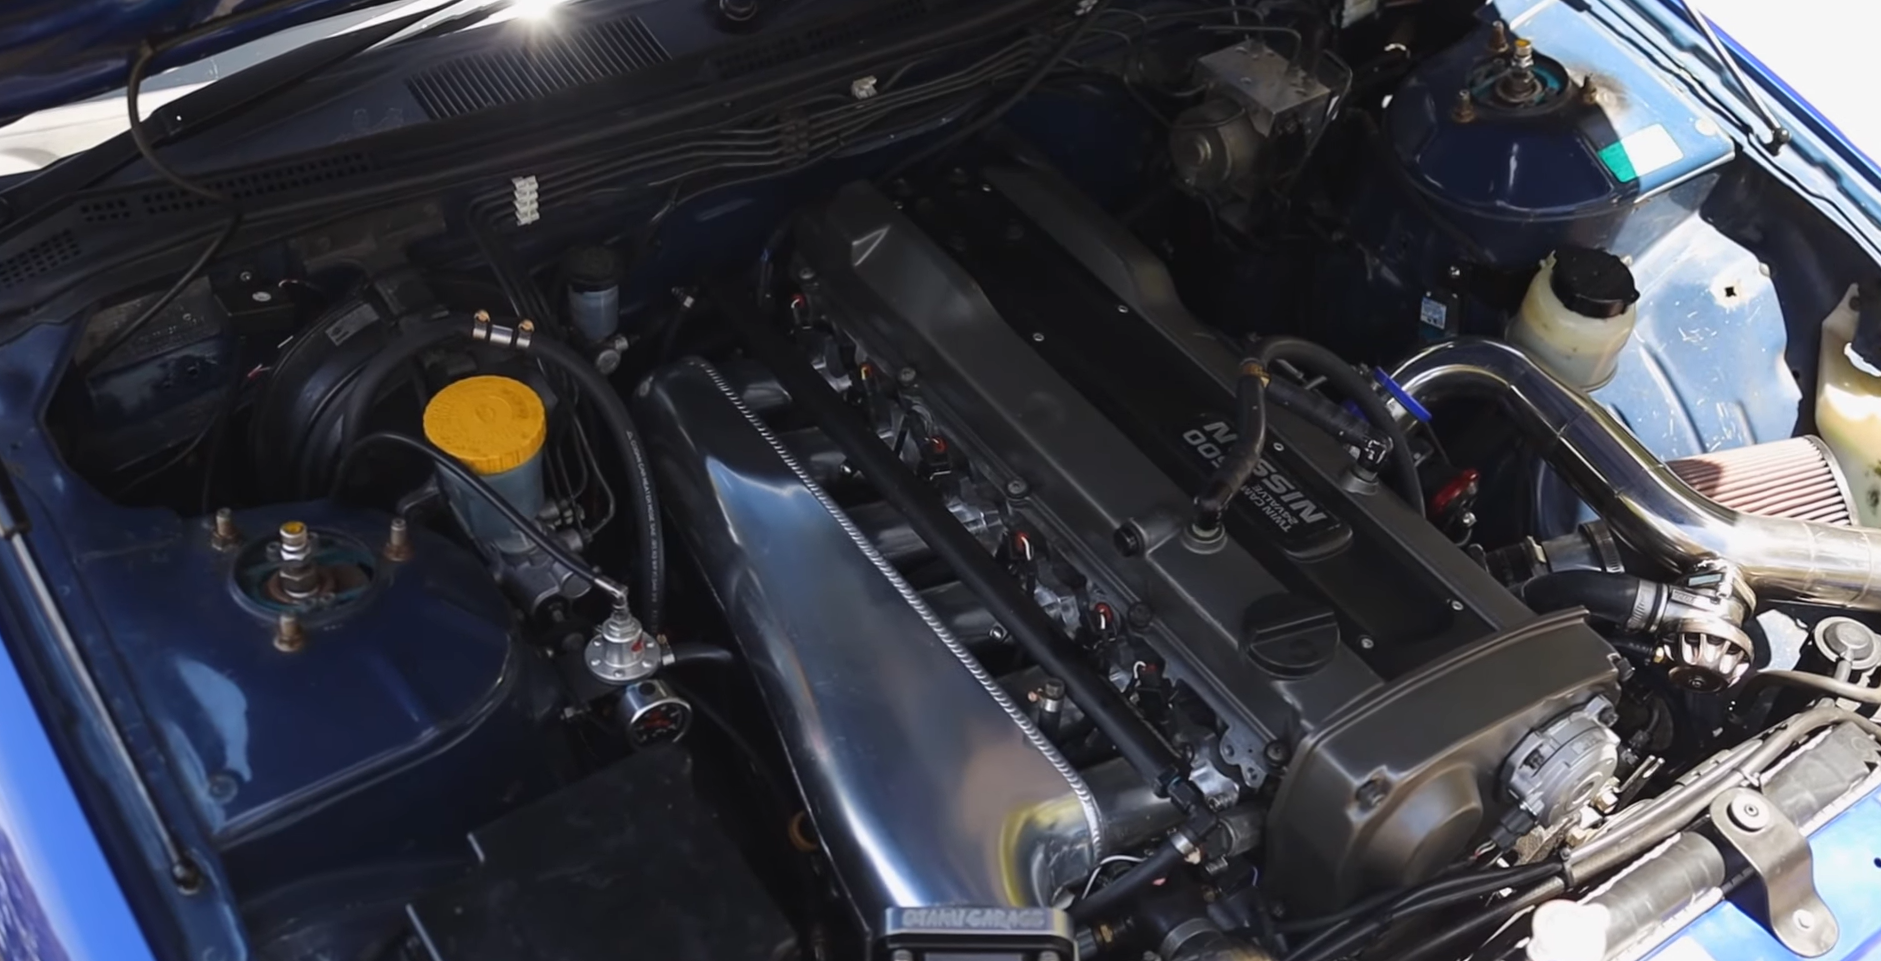 Ross Reviews Silvia S15 RB Engine